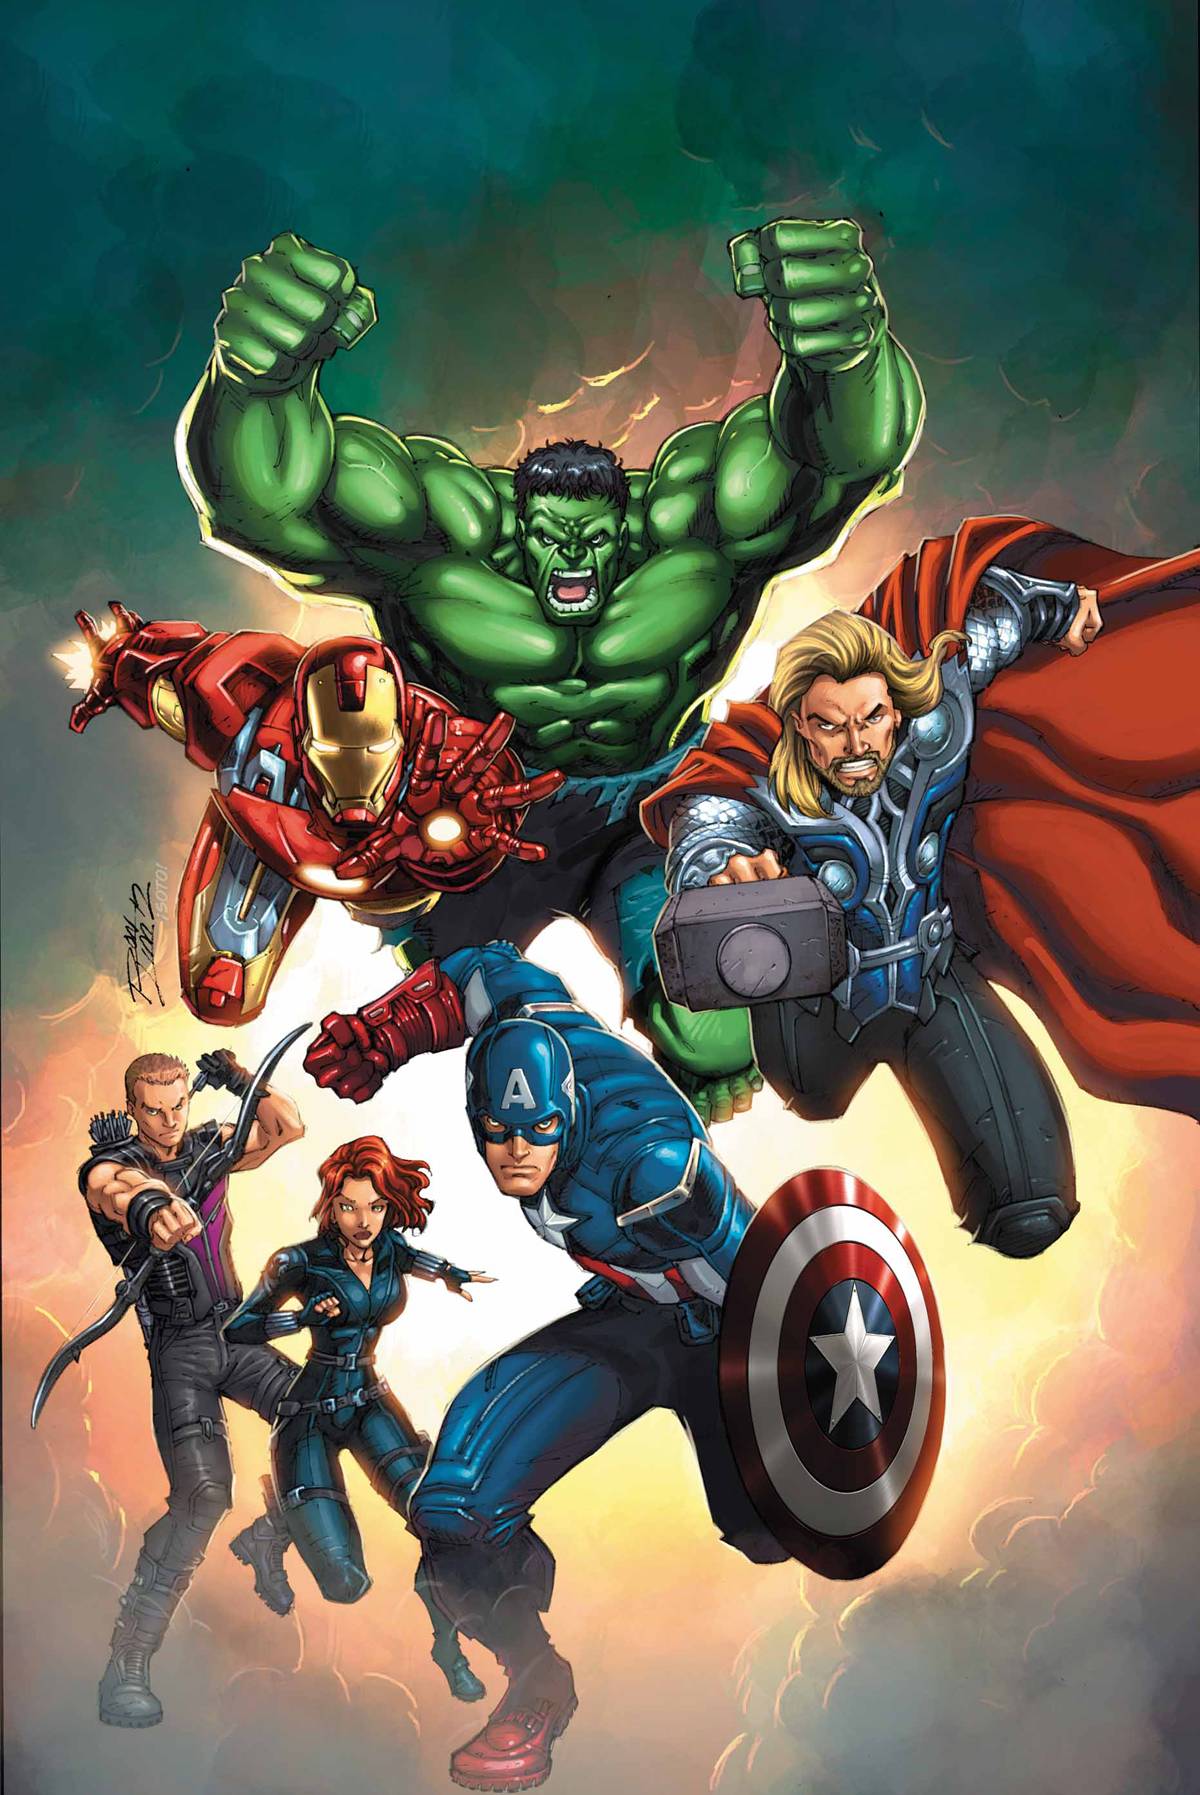 Marvel's The Avengers The Avengers Initiative #1 (2011)